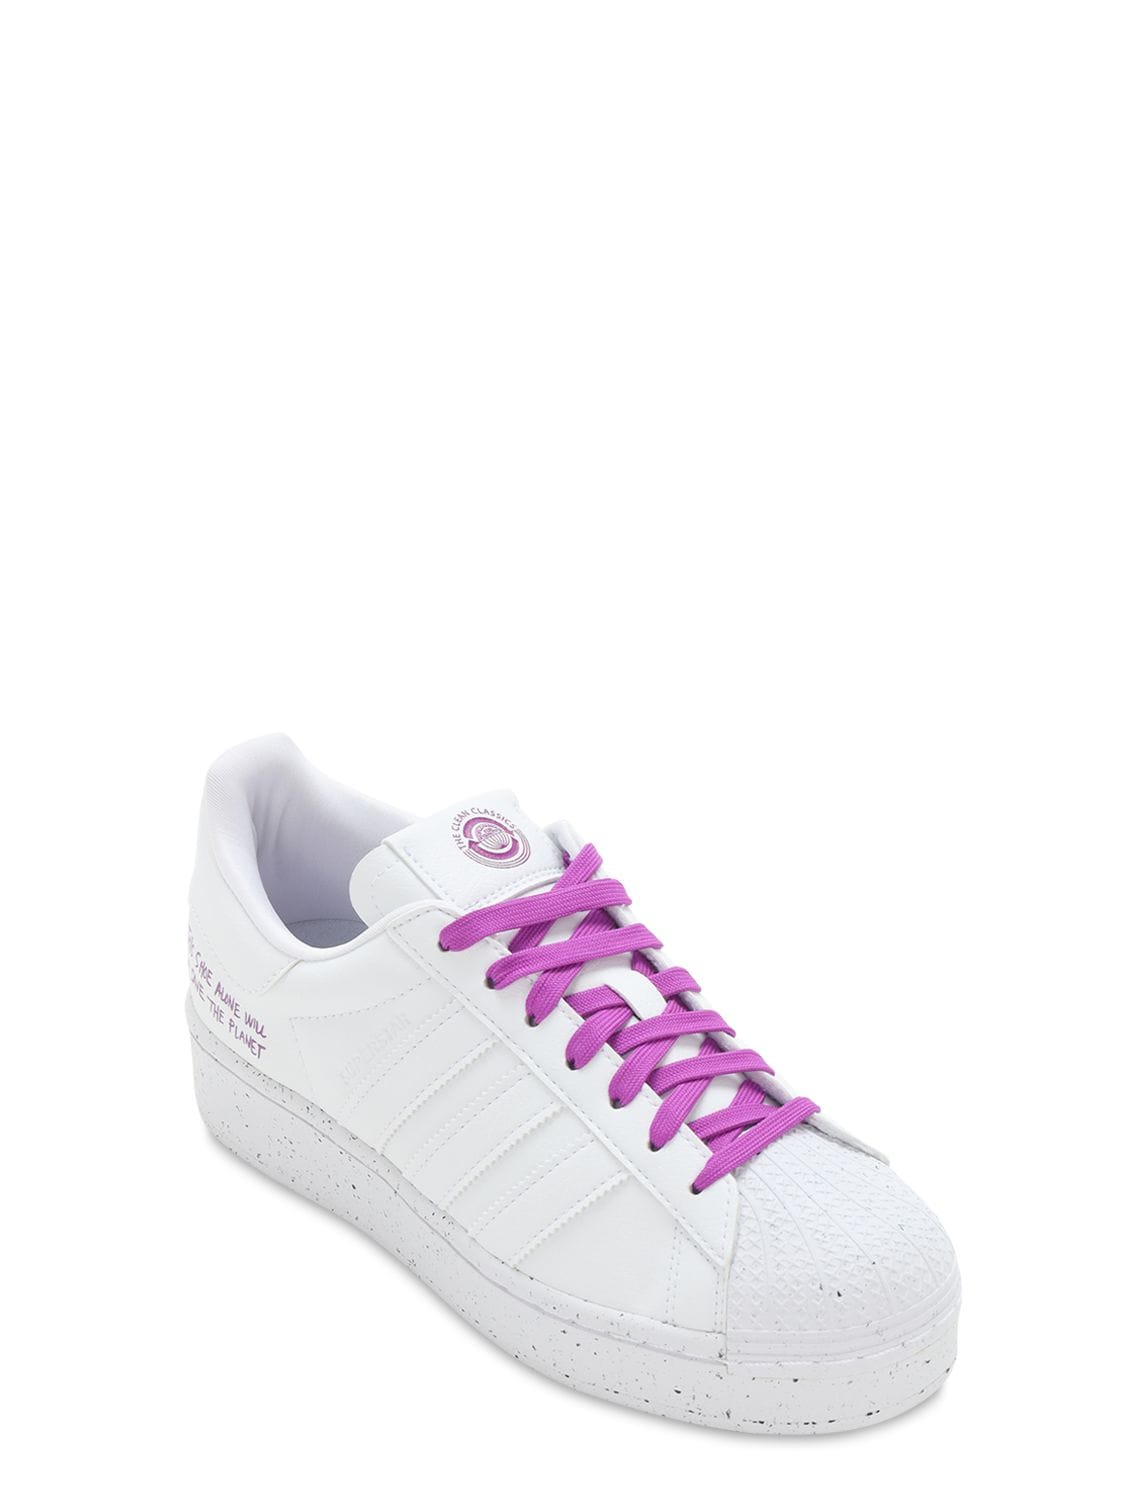 Adidas Originals Superstar Bold Vegan Sneakers In White,purple | ModeSens